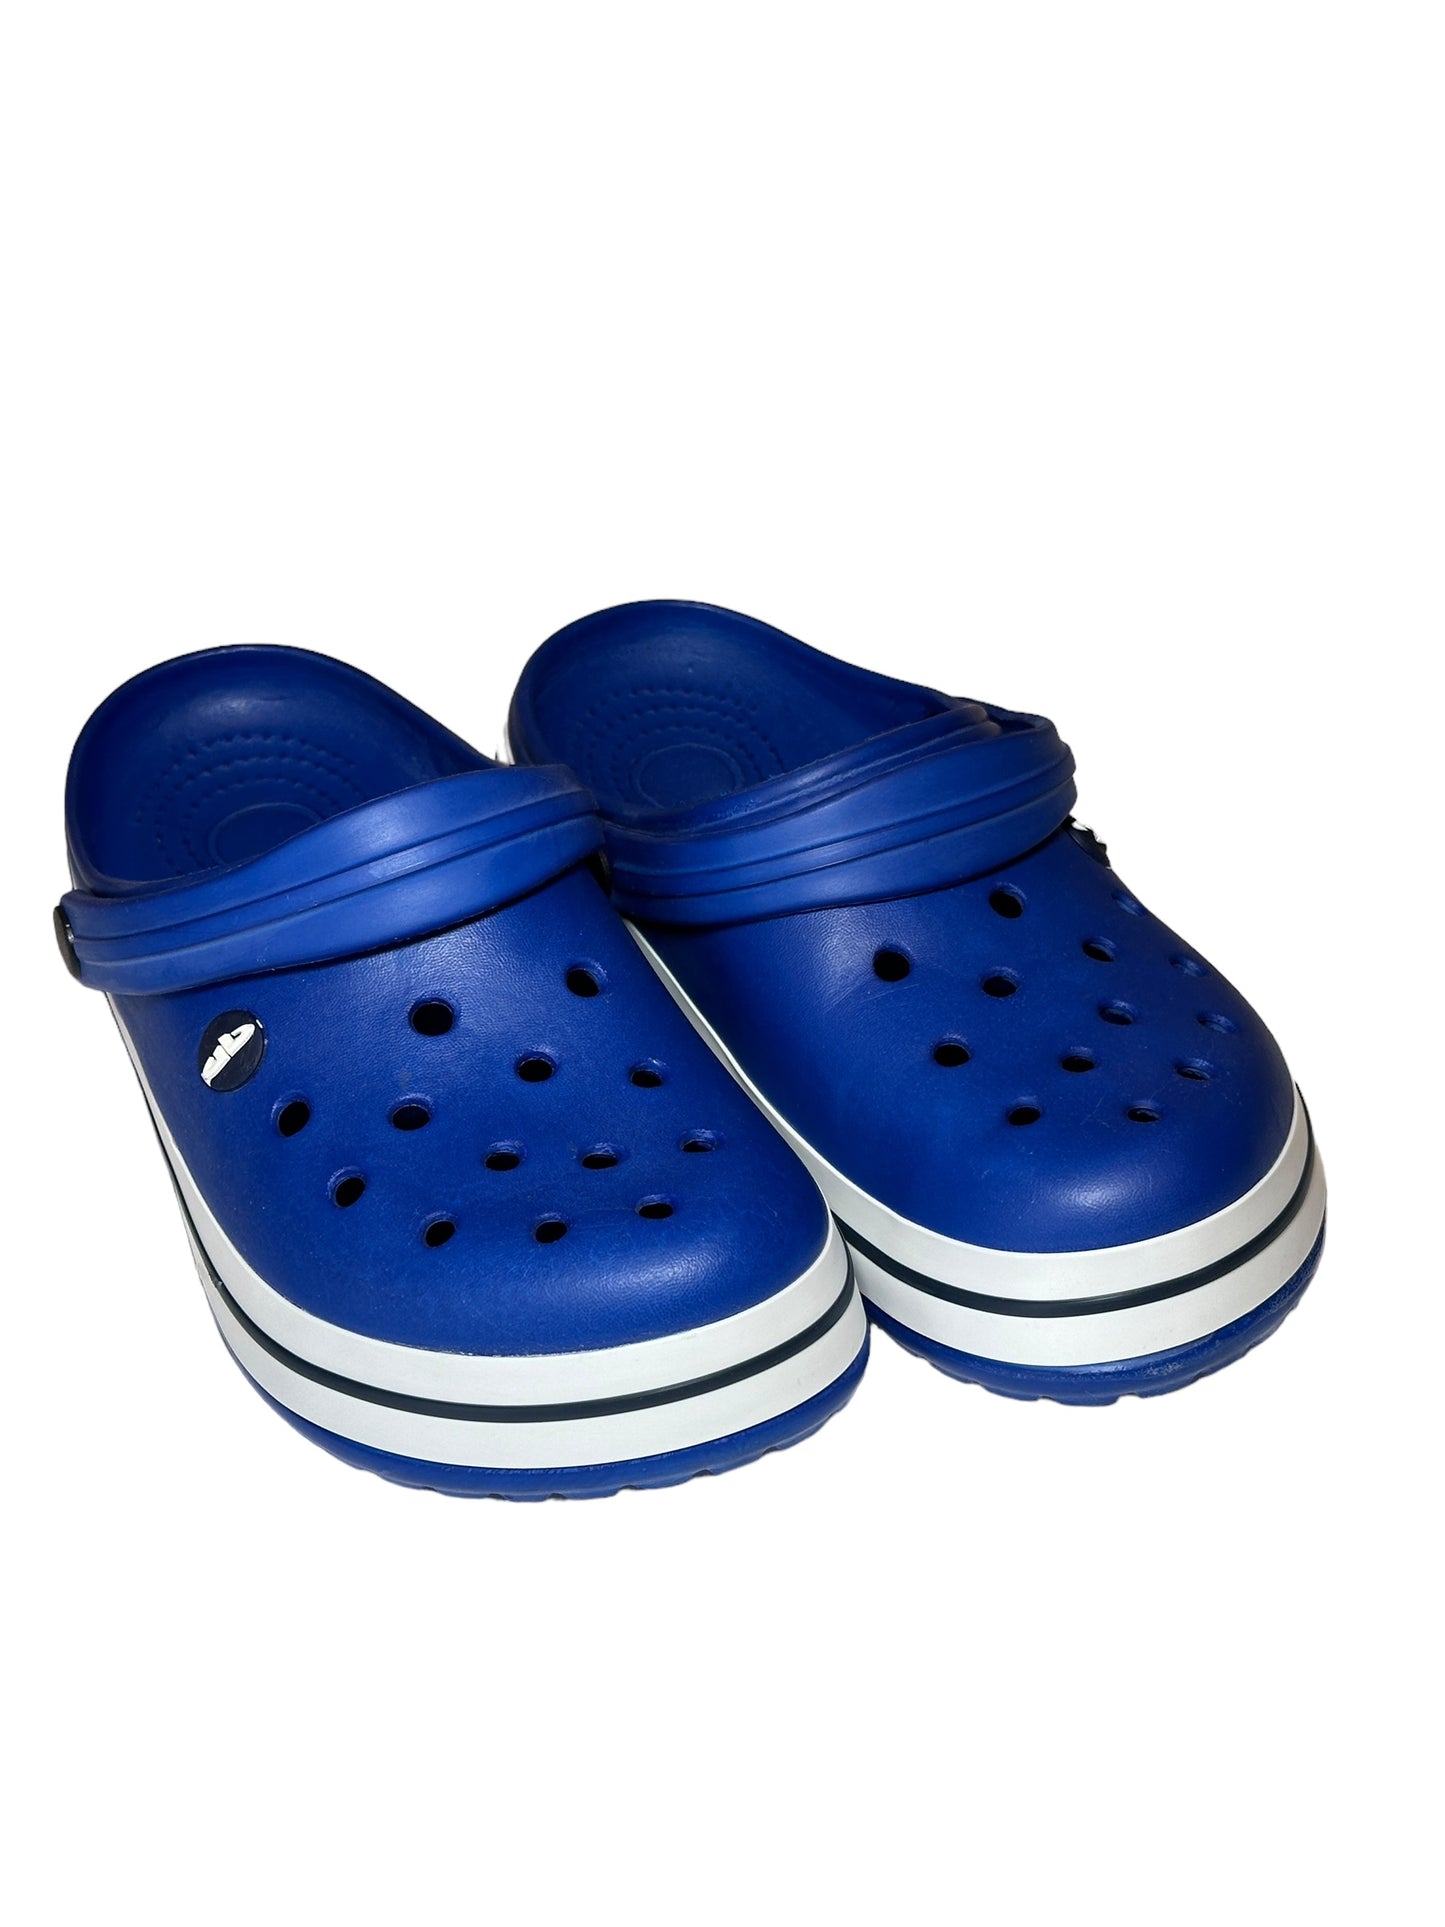 Orthopedic Crocs Medical Clogs, Royal Blue, Unisex 